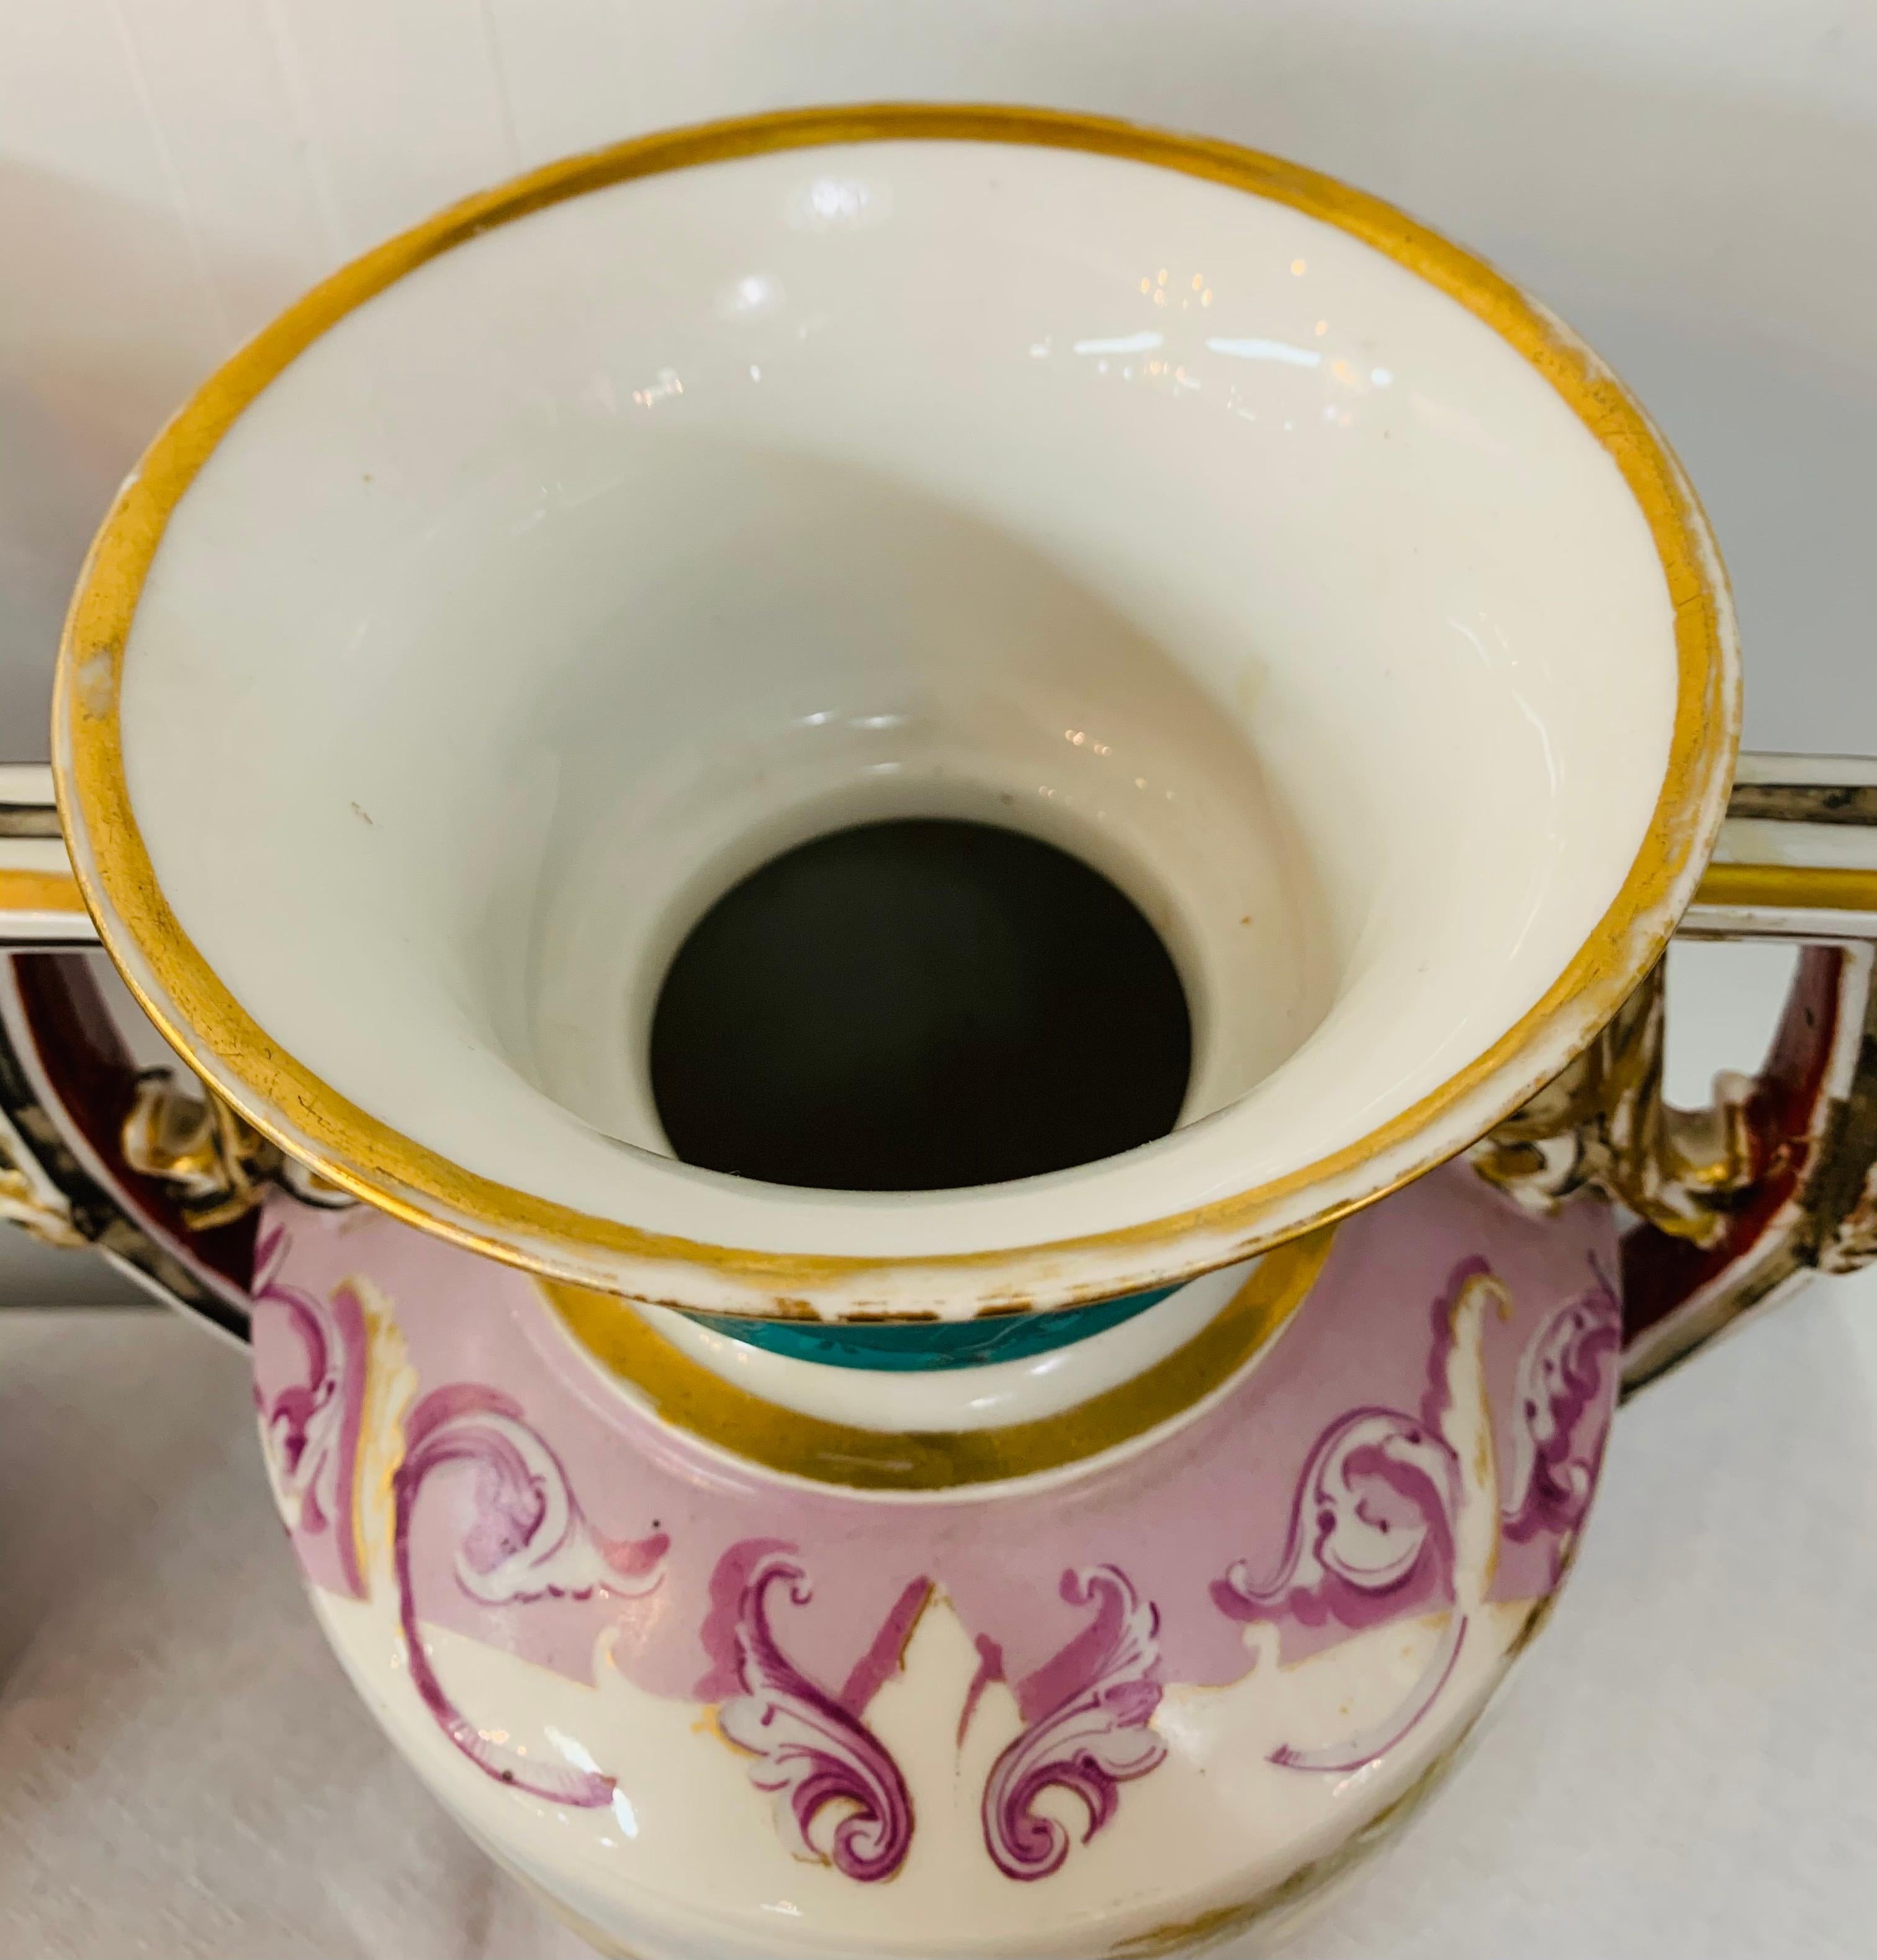 Belle Époque French Sèvres Style Vase or Urn, a Pair For Sale